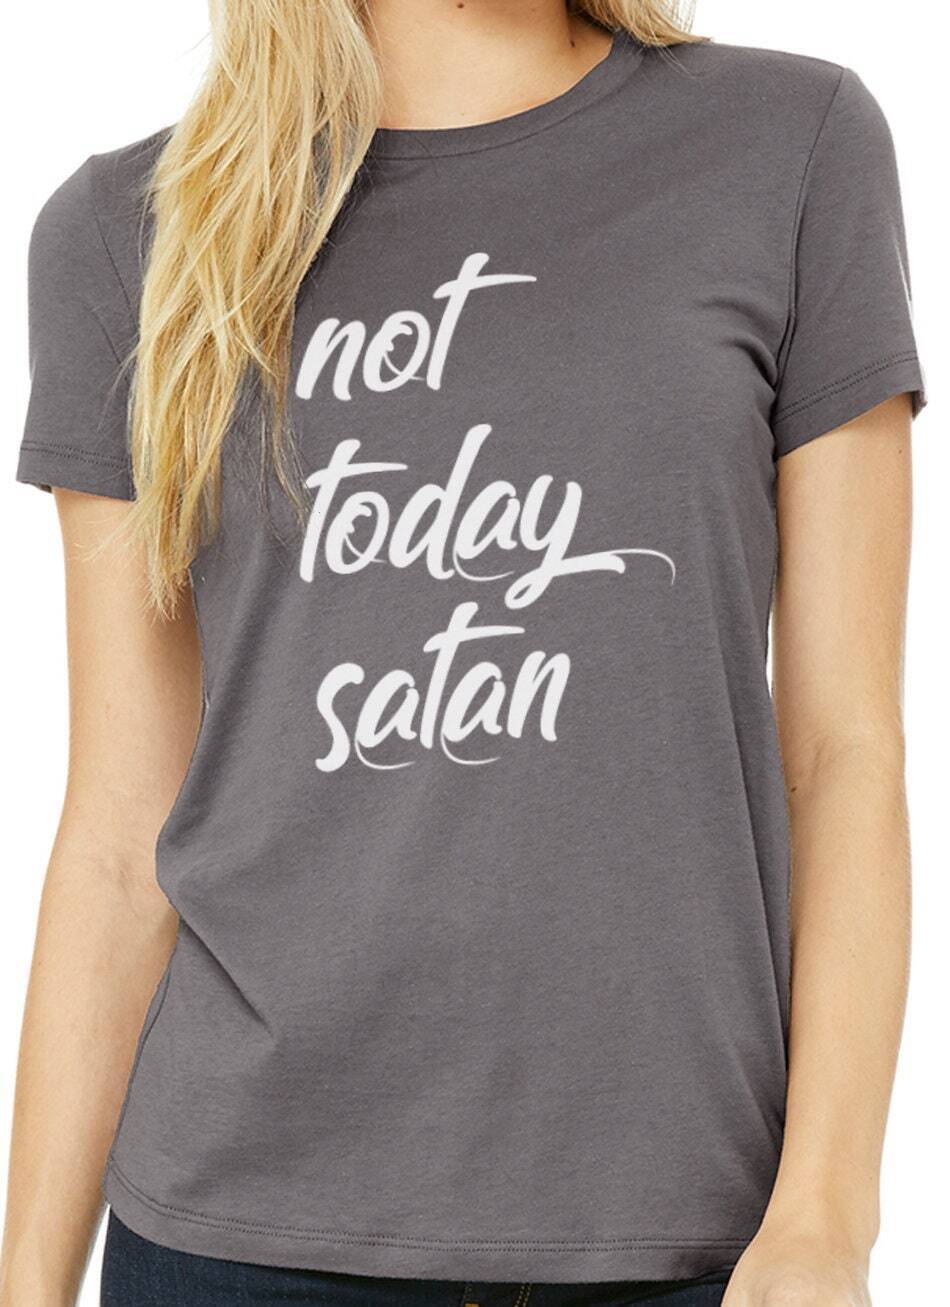 Not Today Satan | Christian Women's Tee - Wife Shirt